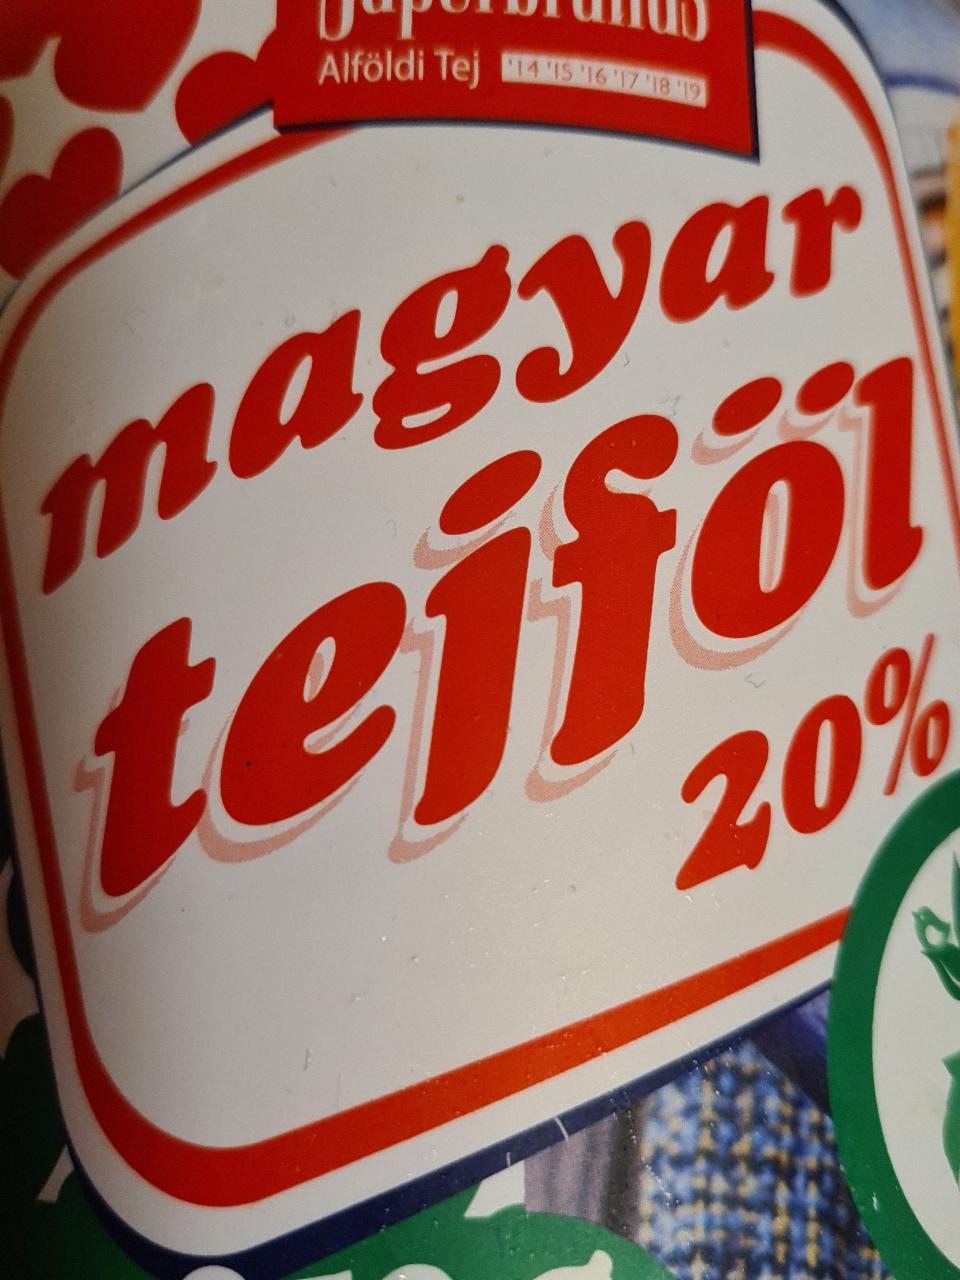 Képek - Tejföl magyar 20% Alföld